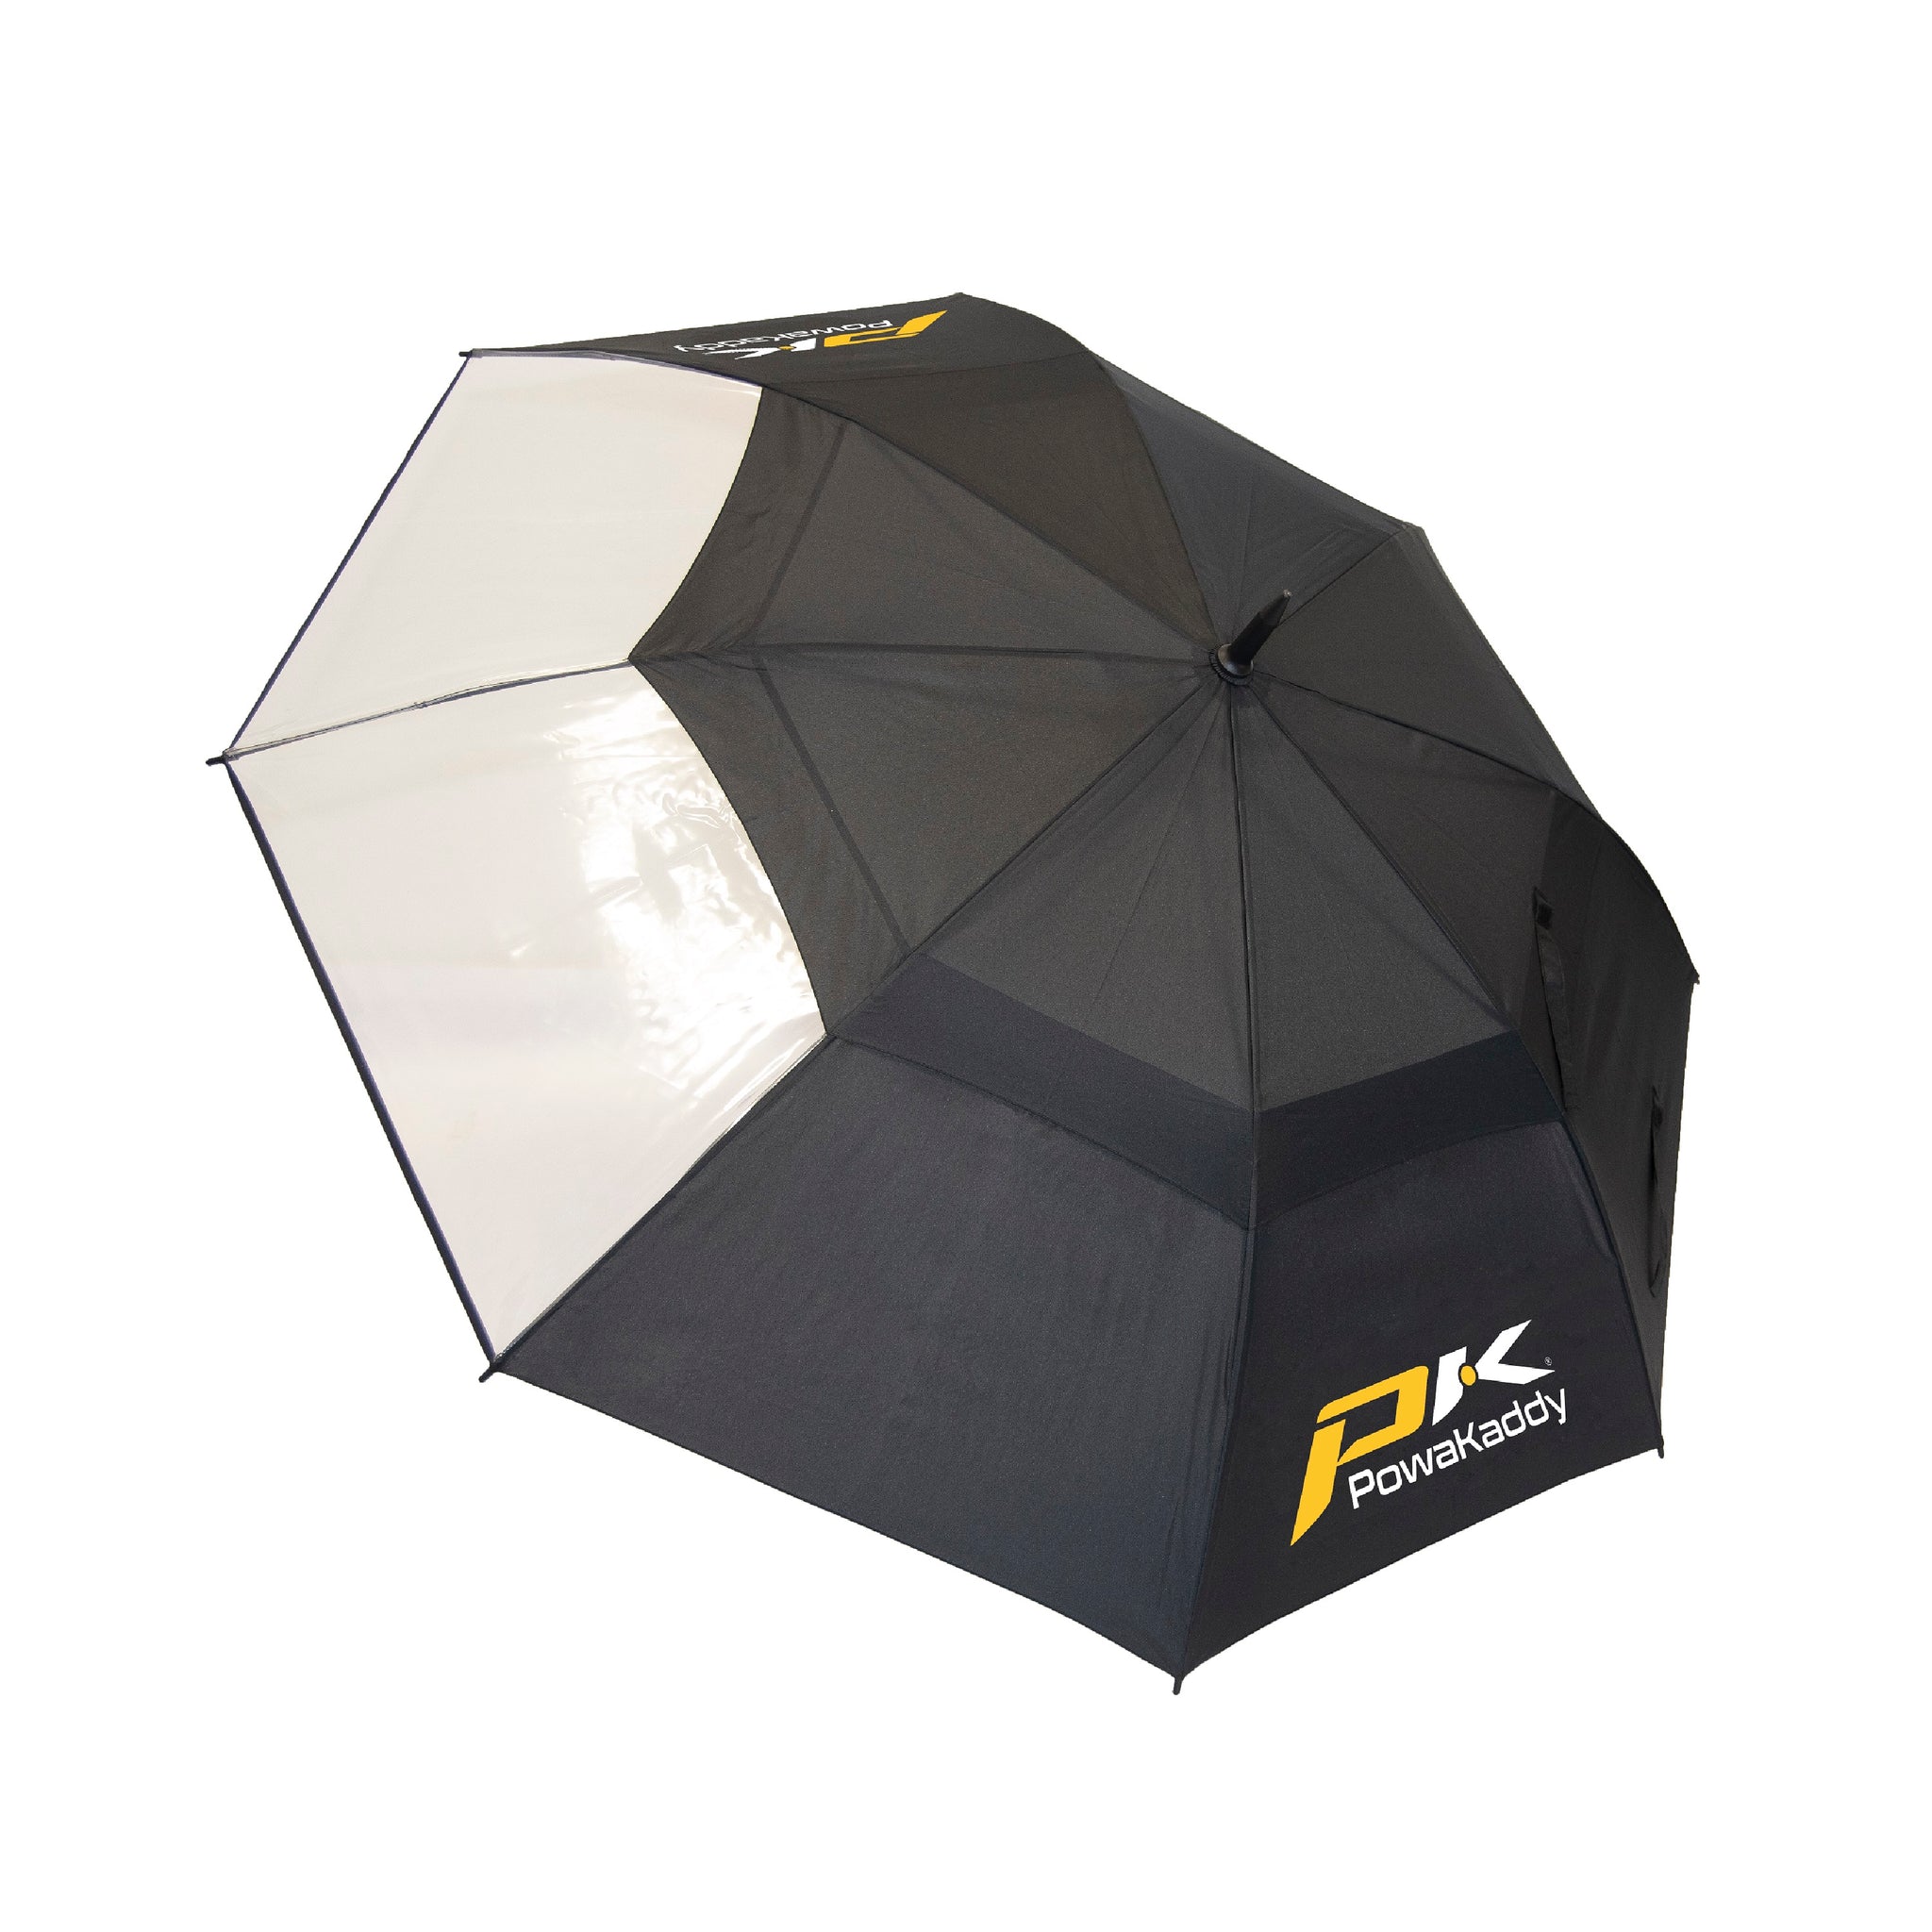 powakaddy-double-canopy-umbrella-00050-02-02-black